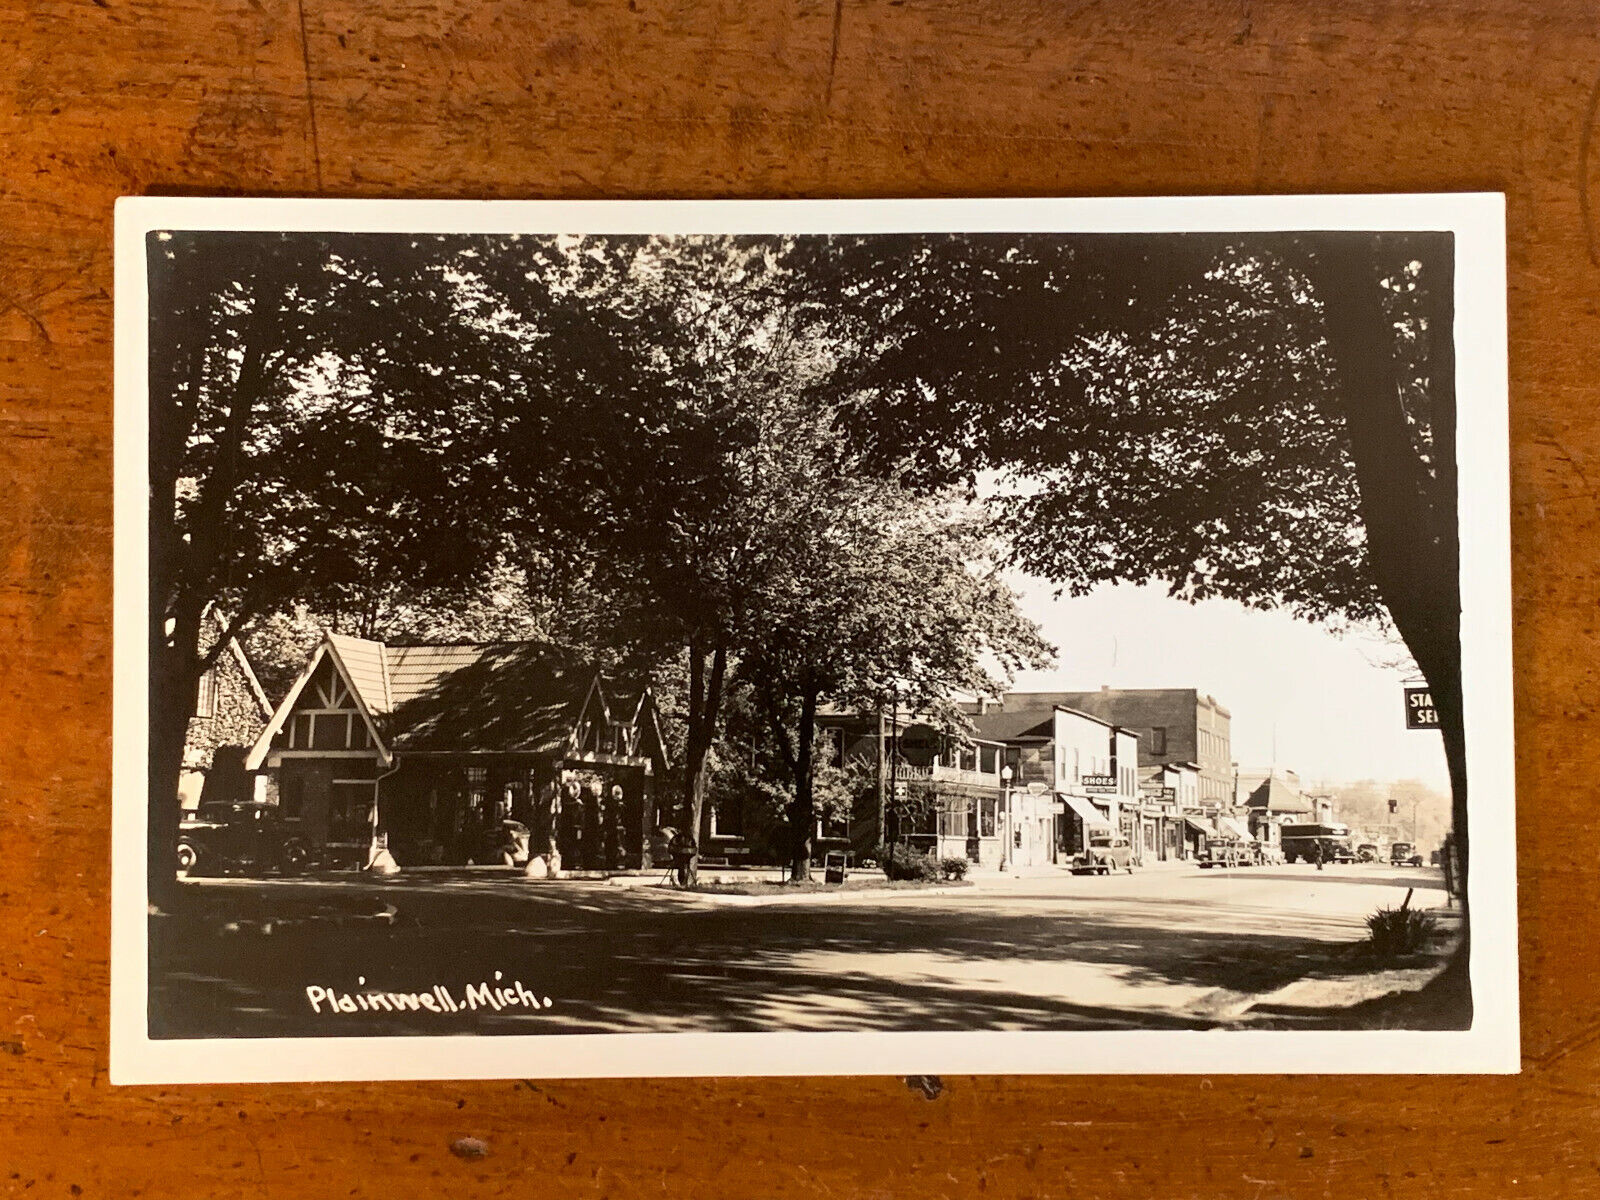 MI, Michigan, RPPC, Plainwell, View of Main Street, ca 1930